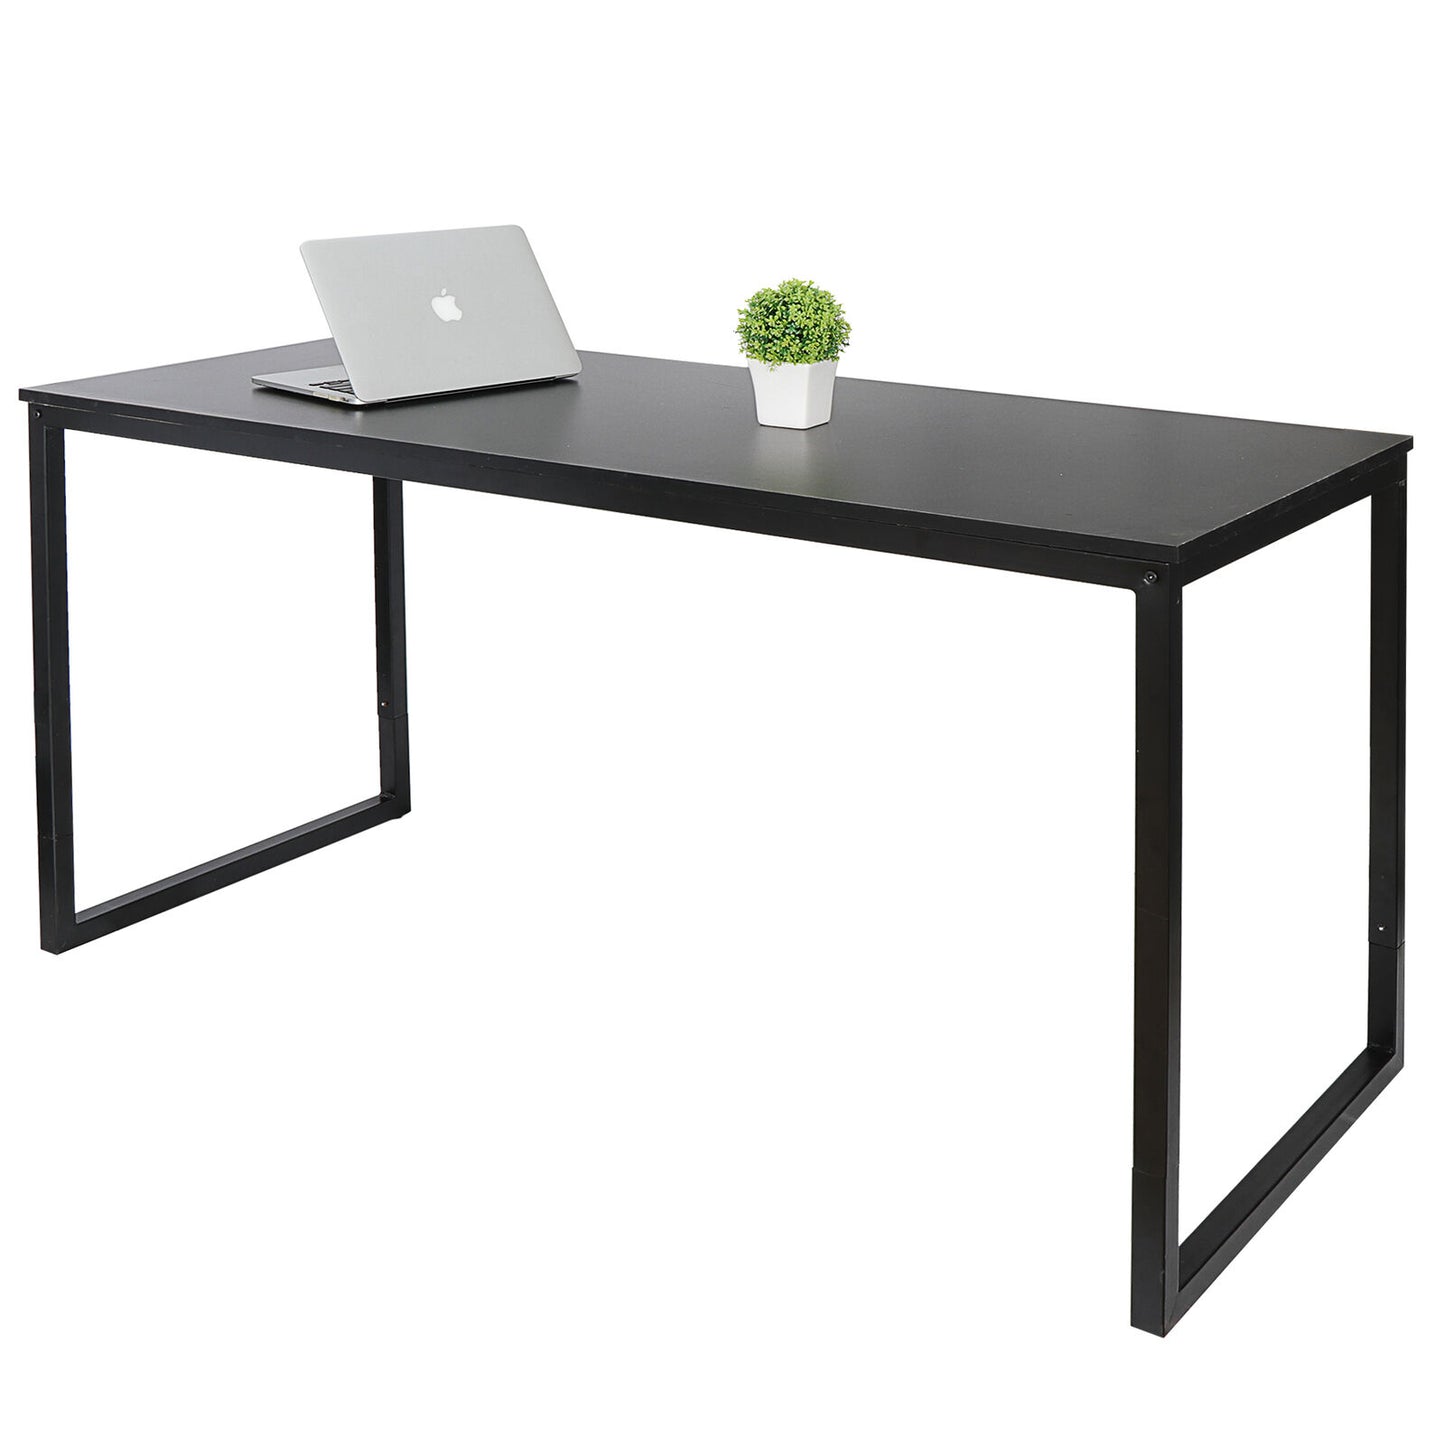 55" Computer Espresso Style Writing Desk Modern Study Office Desk Corner Table